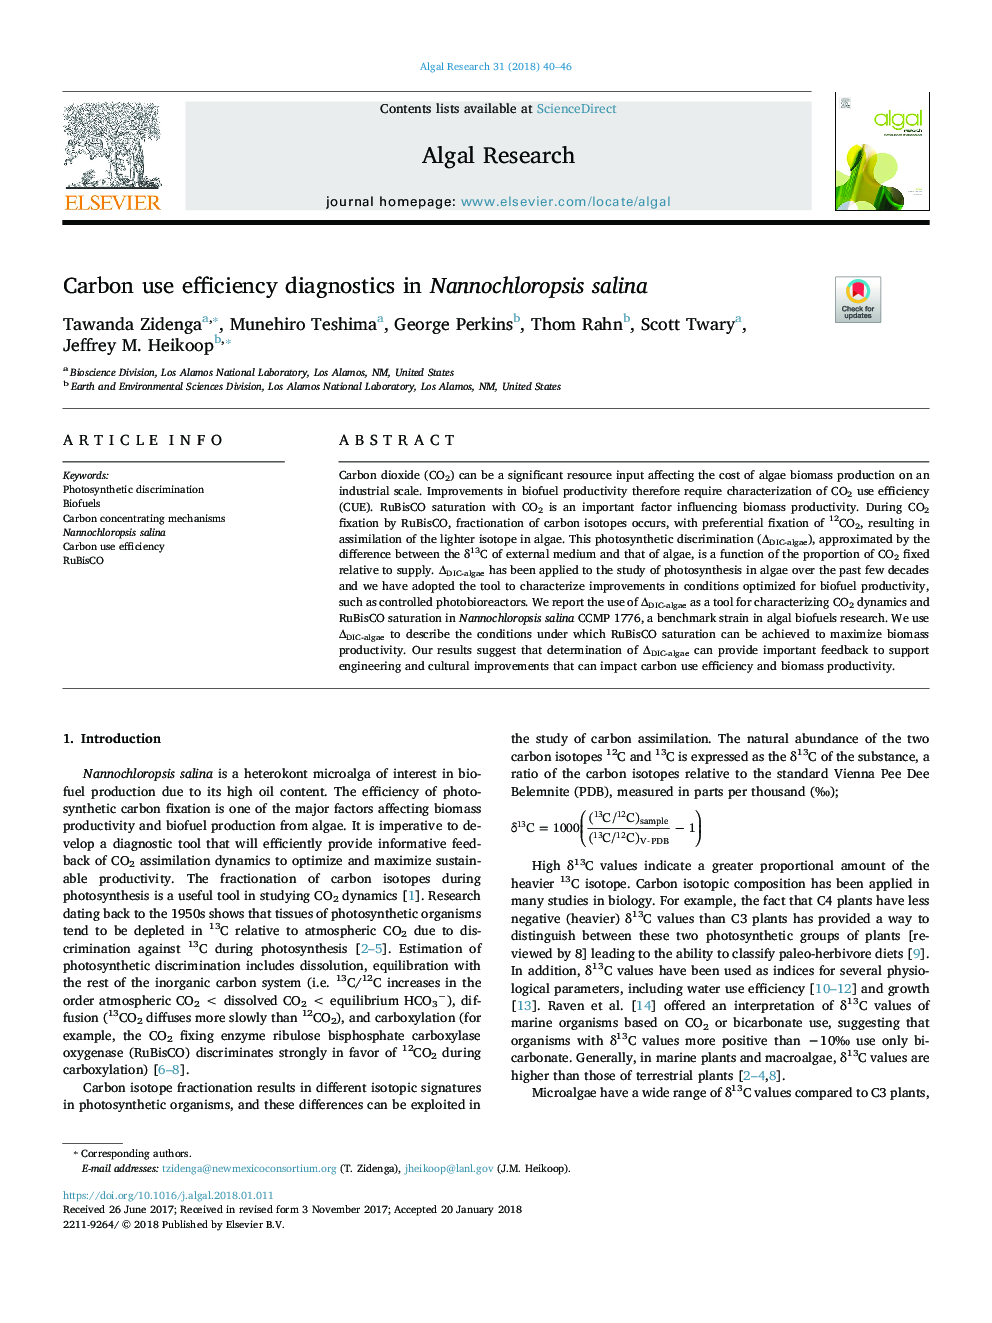 Carbon use efficiency diagnostics in Nannochloropsis salina